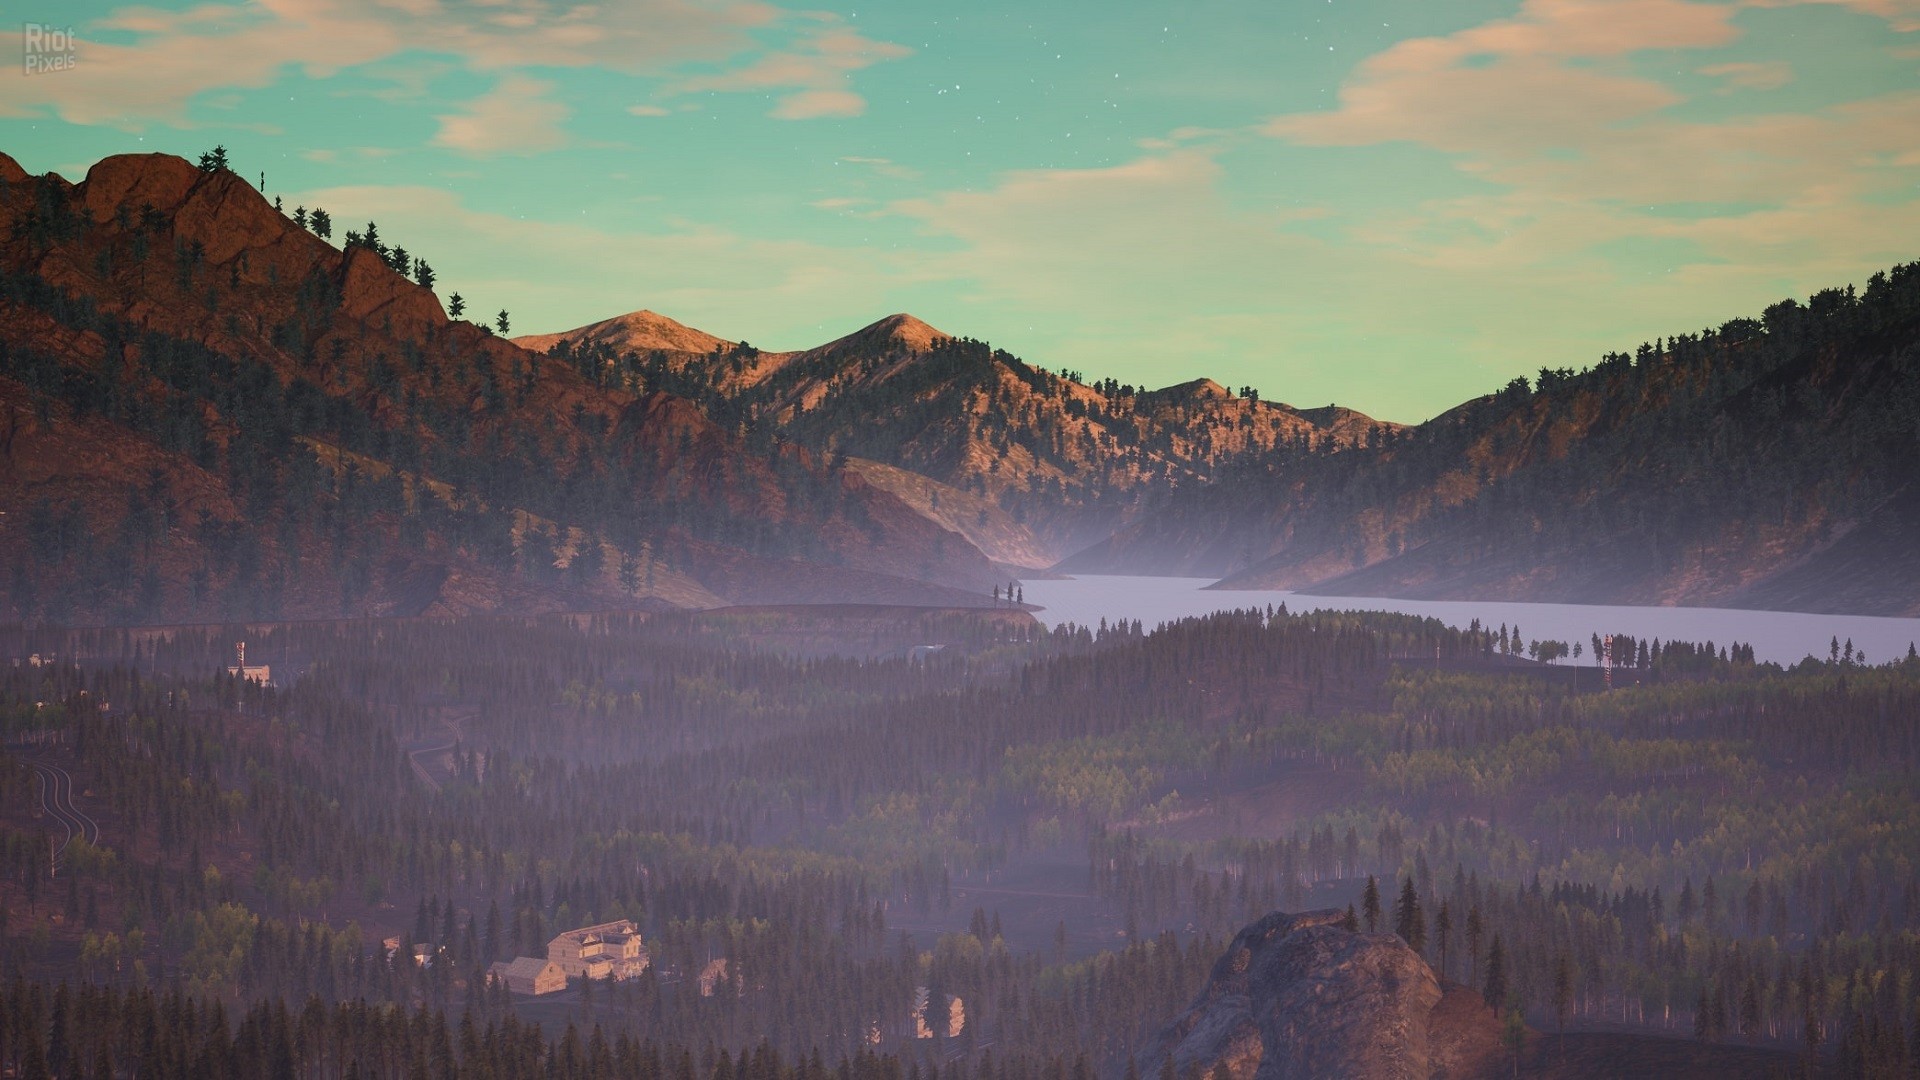 Ranch Simulator - game cover at Riot Pixels, image